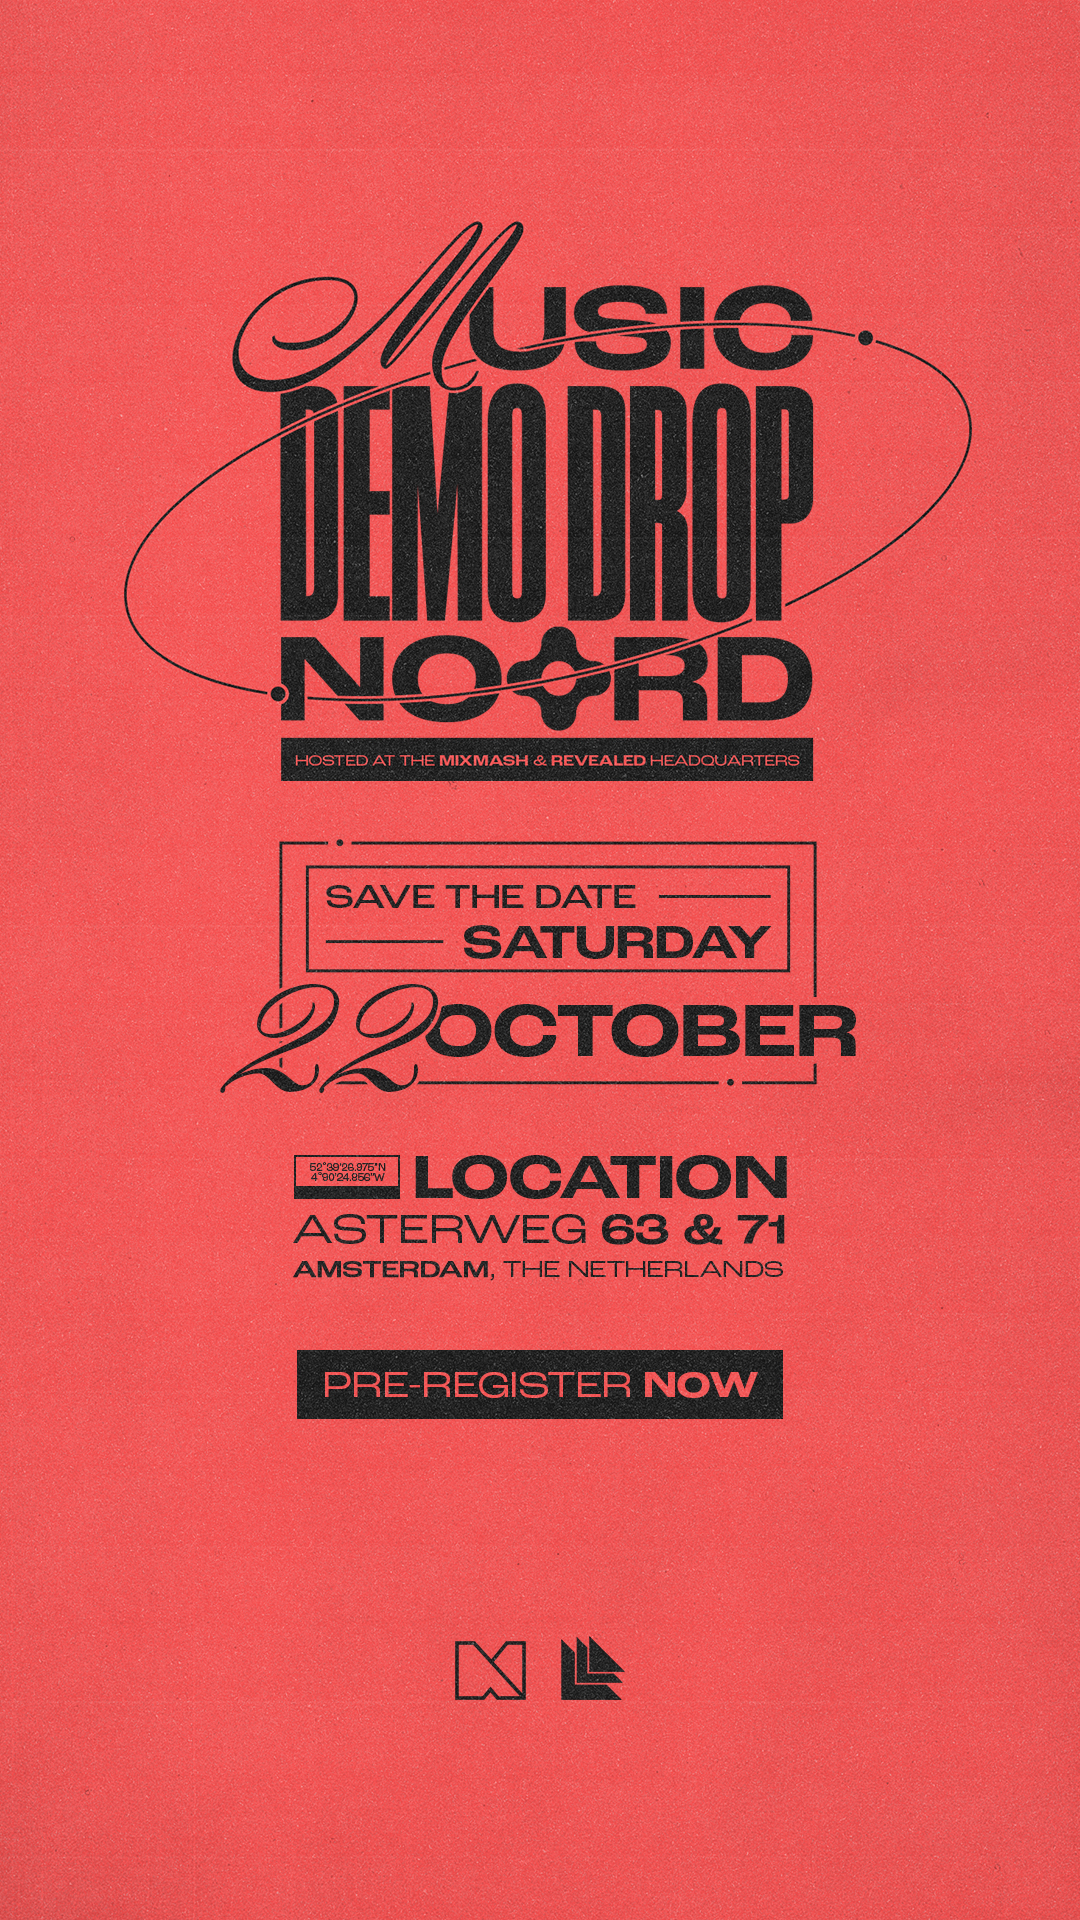 Music Demo Drop Noord 